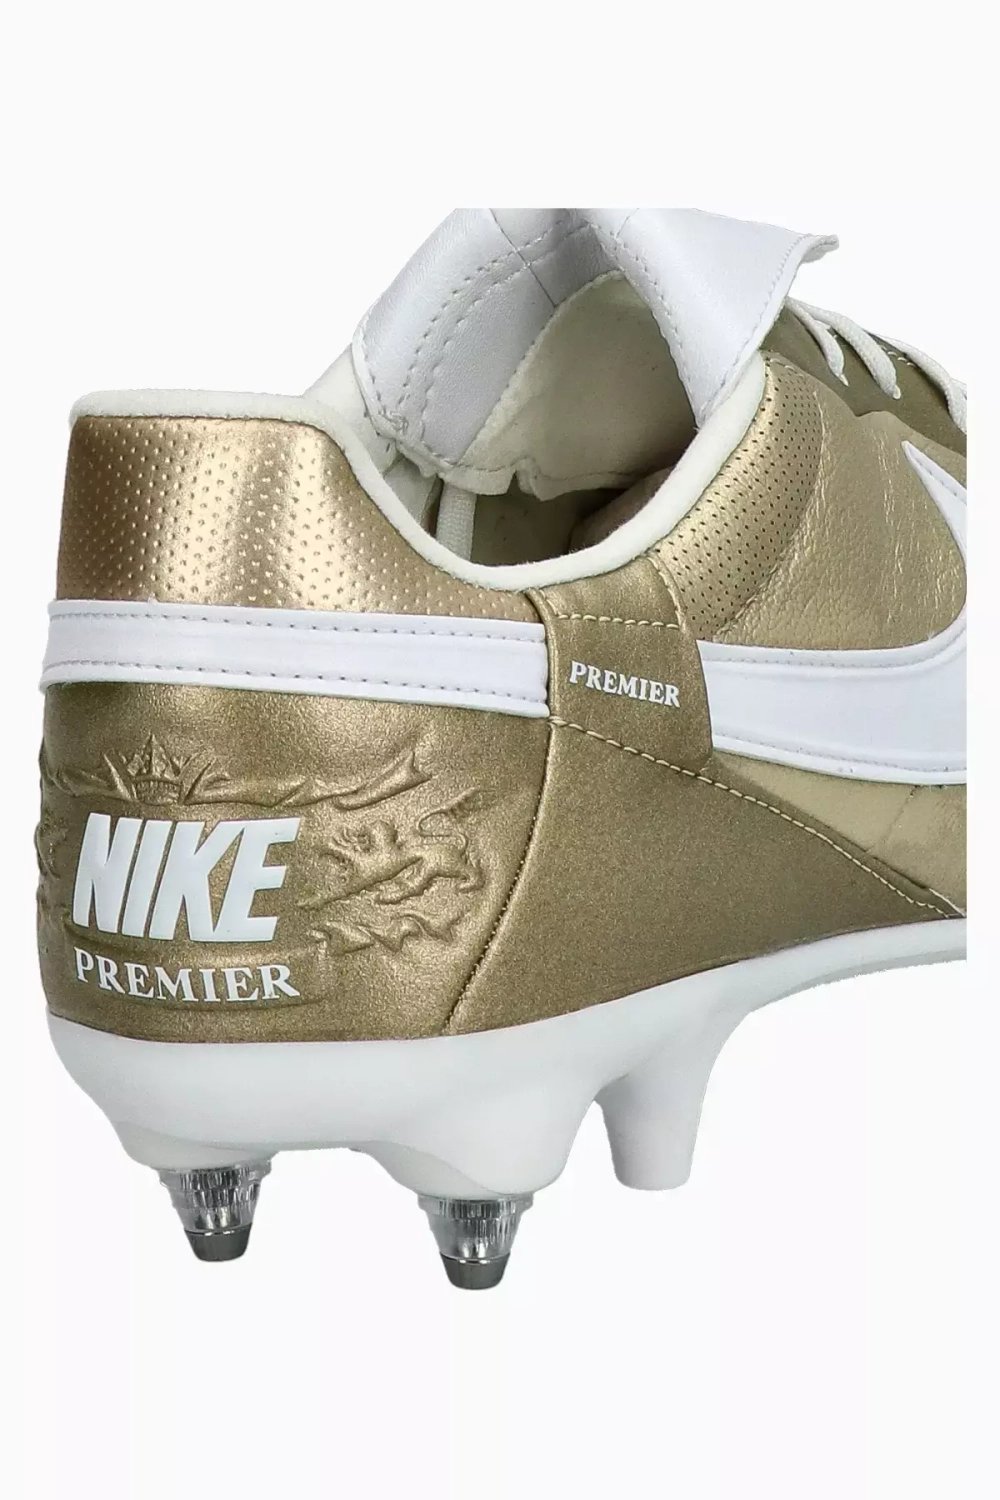 Бутсы Nike Premier III SG-PRO AC